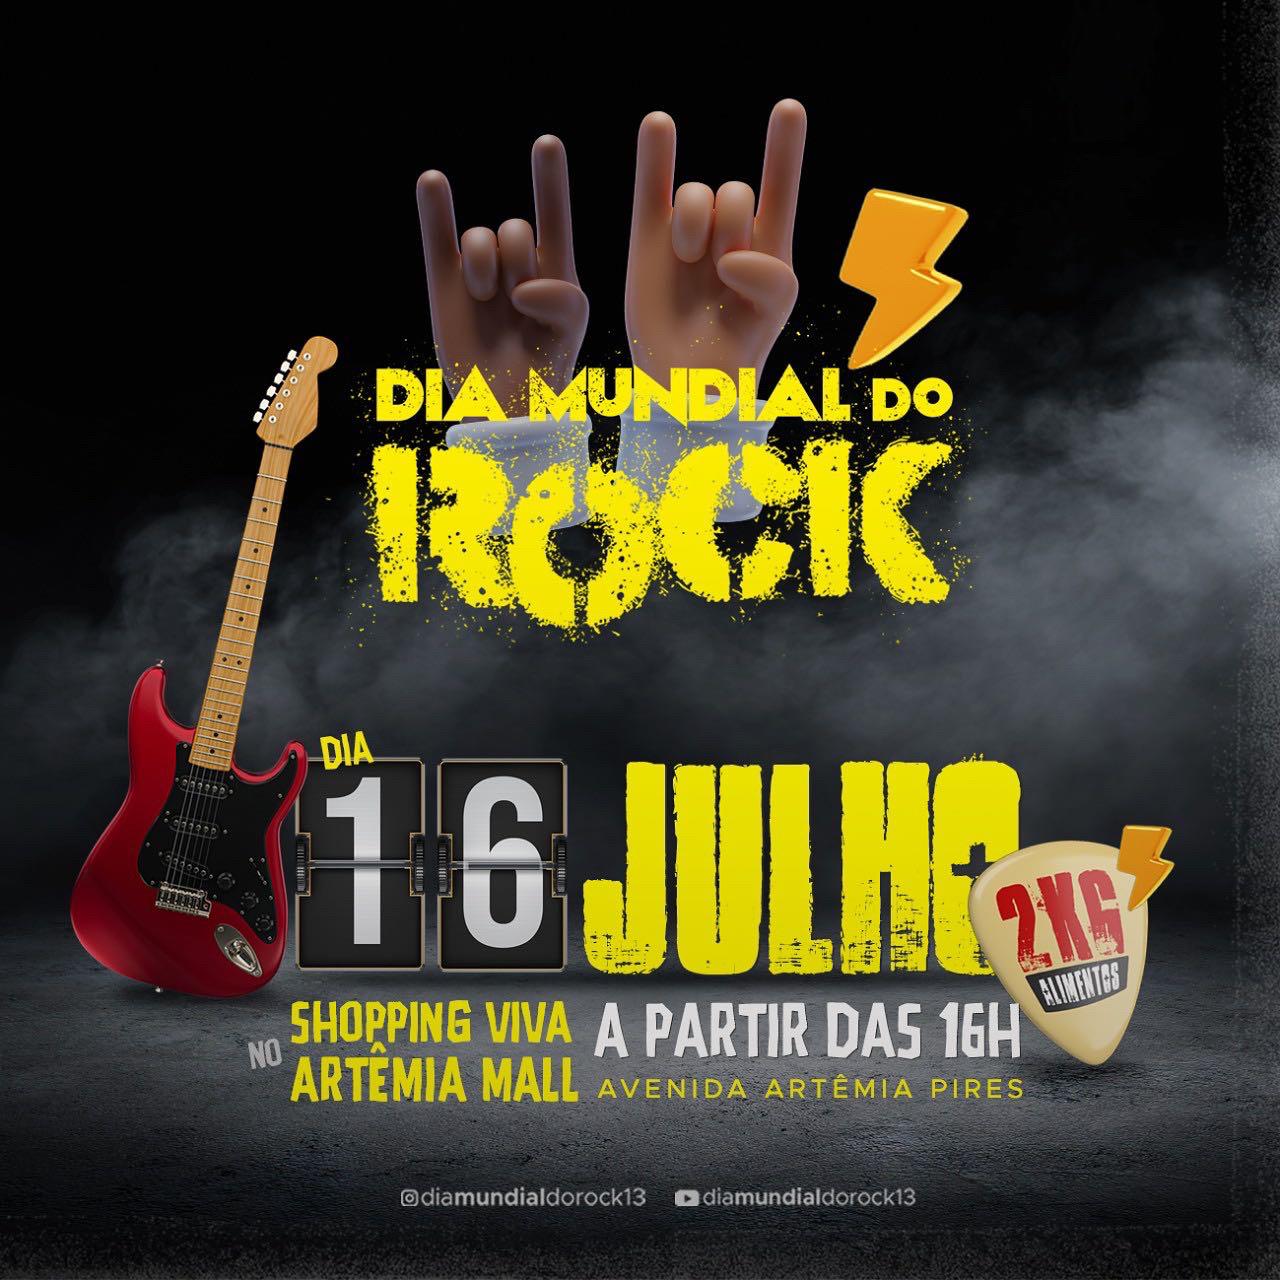 Dia Mundial do Rock será realizado neste sábado (16) no Viva Artêmia Mall